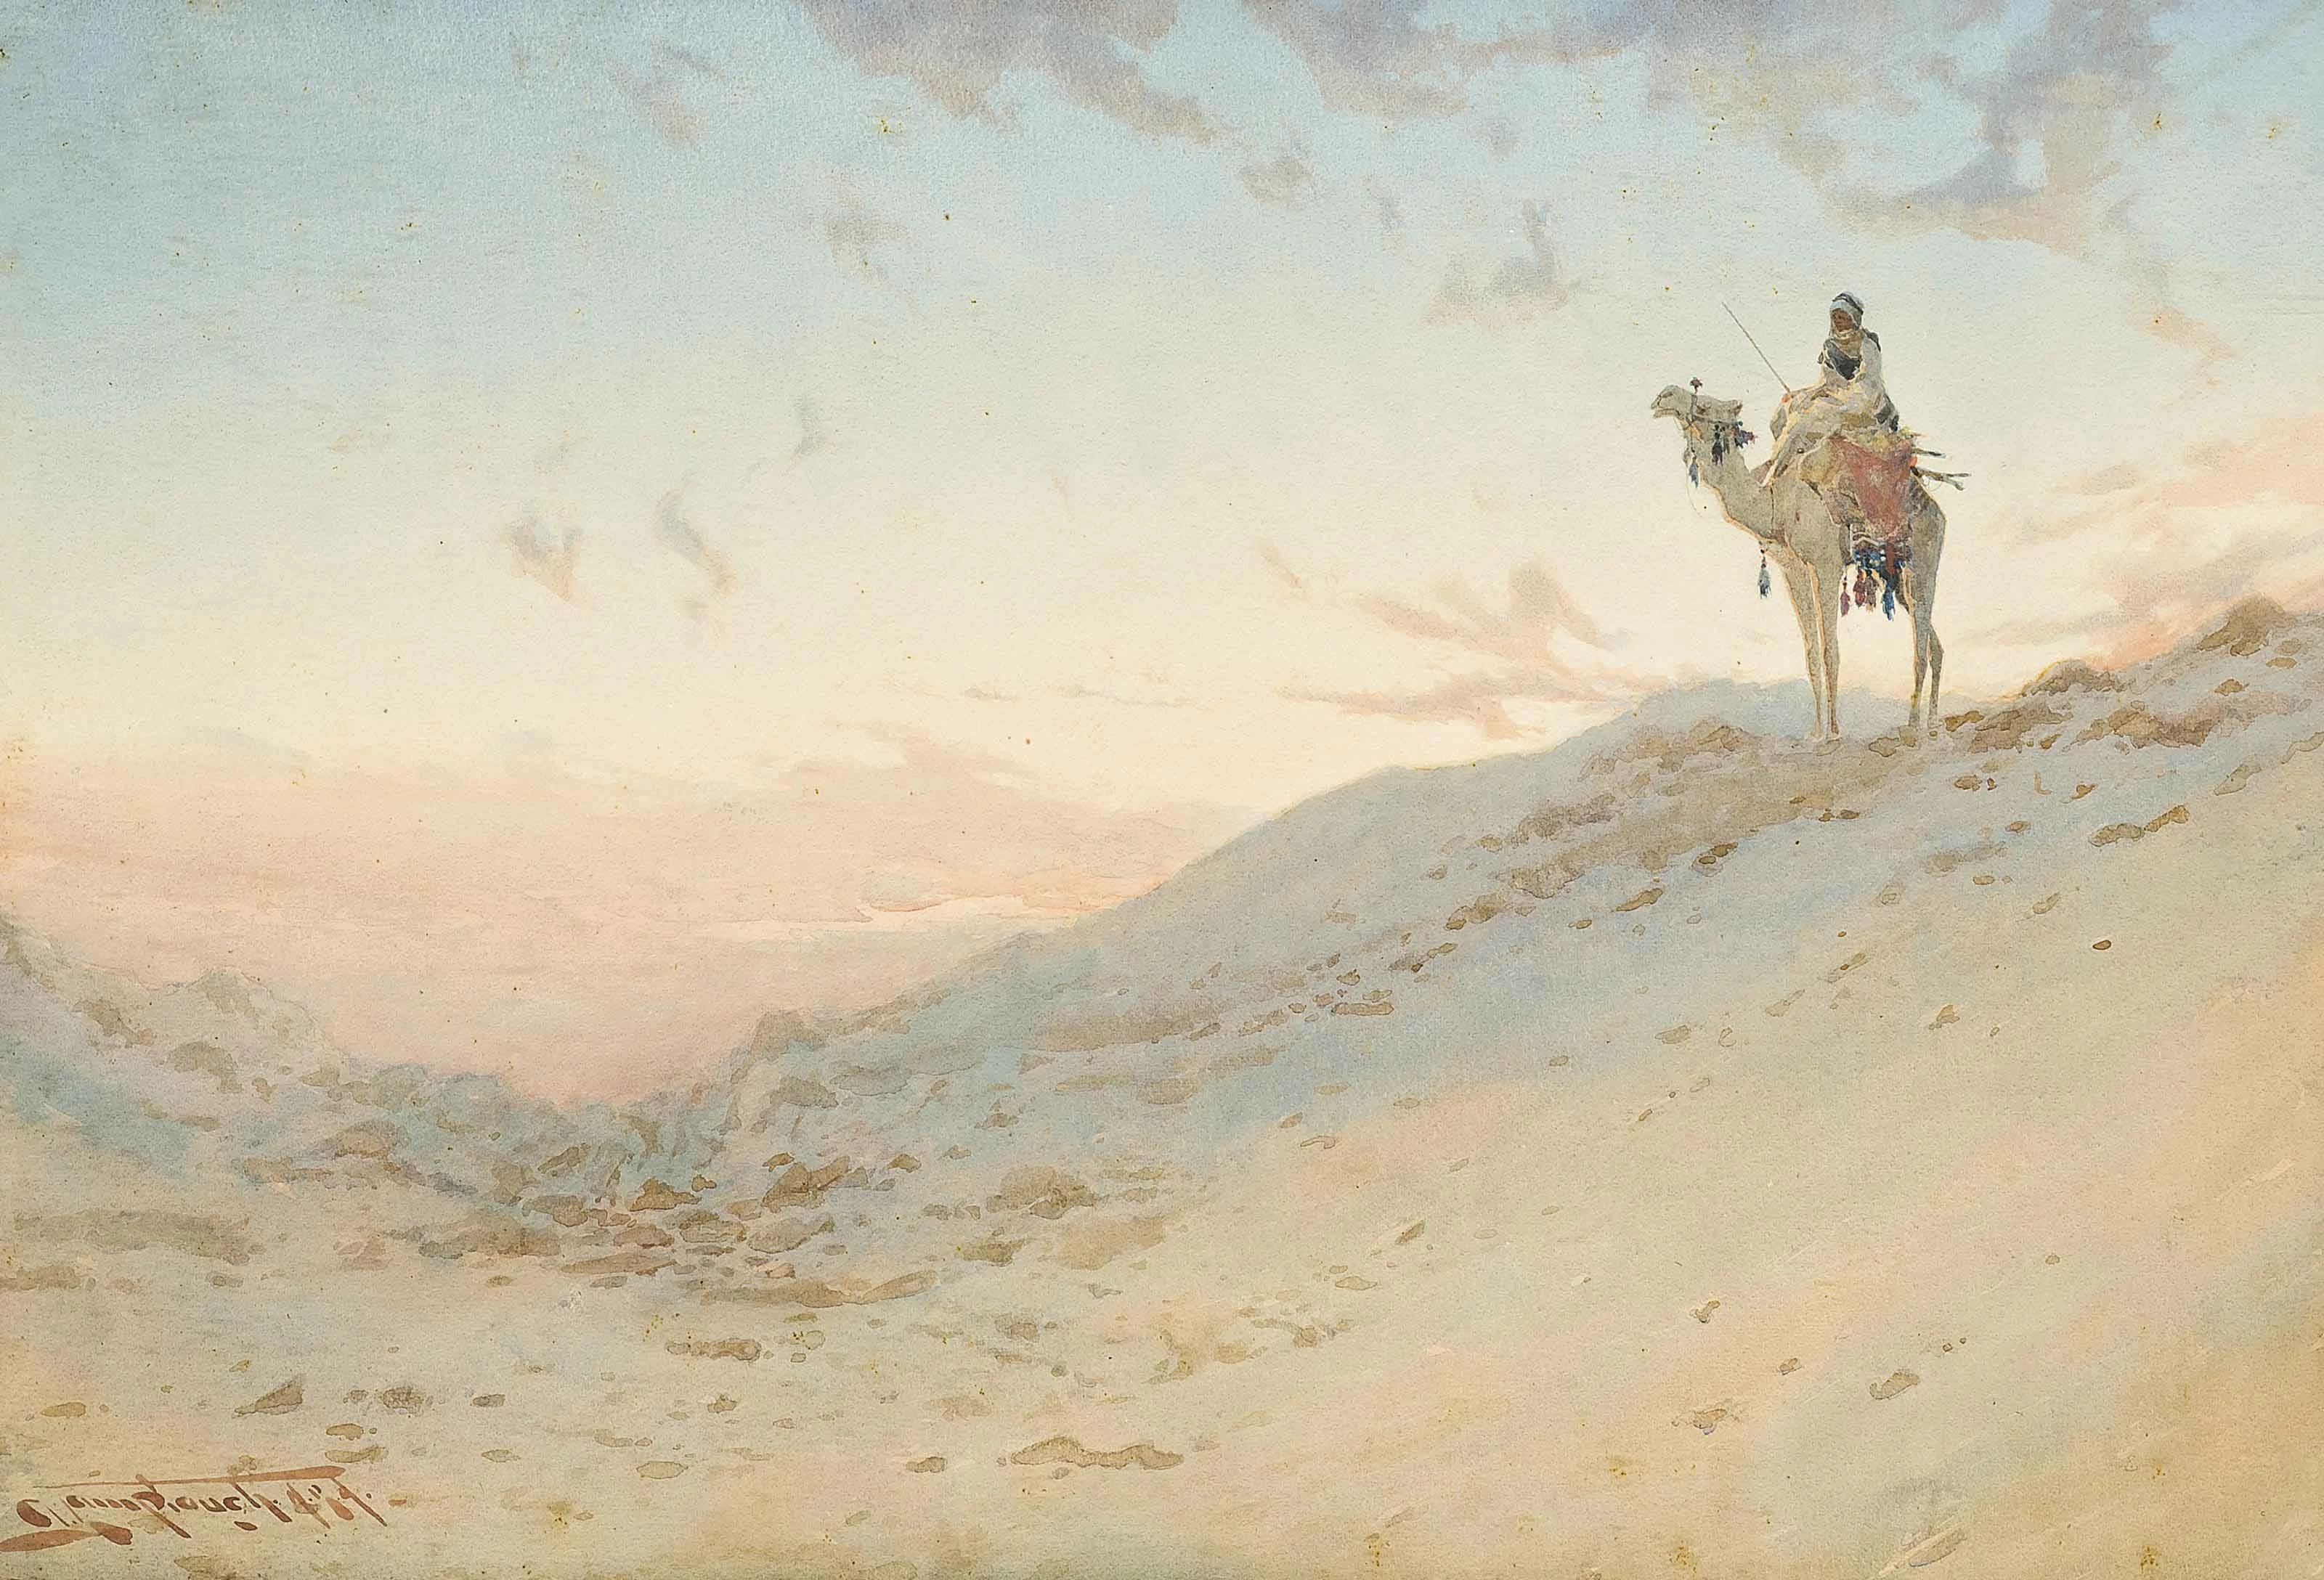 An Arab on a camel surveying the desert at dusk, Augustus Osborne Lamplough